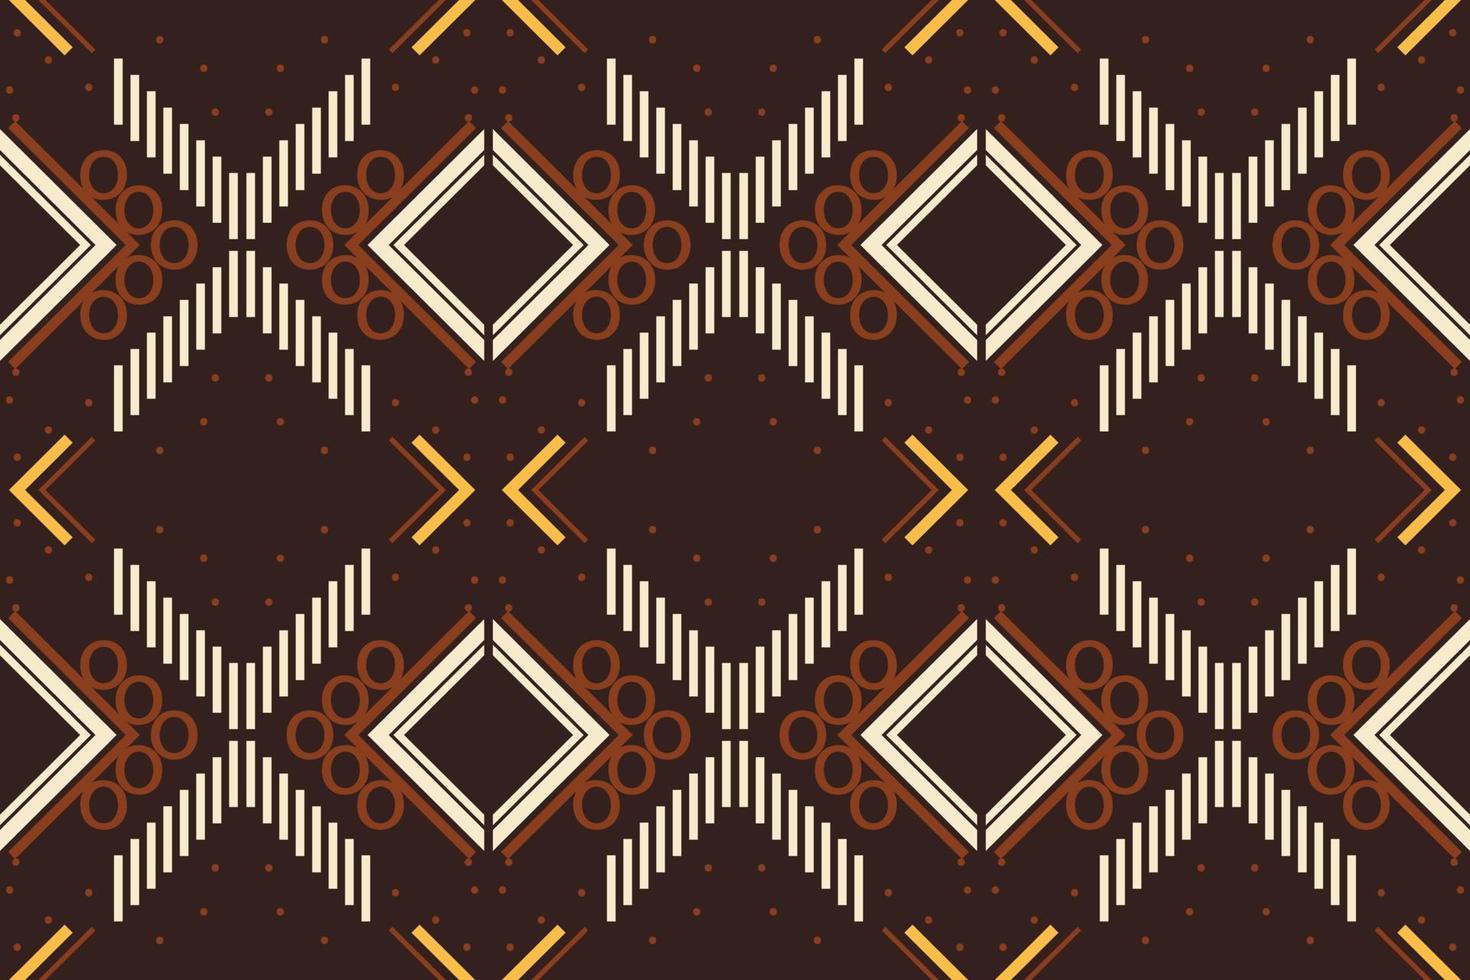 étnico azteca ikat patrón sin costuras motivo textil ikat patrón sin costuras diseño de vector digital para imprimir saree kurti tela de borneo símbolos de pincel azteca muestras ropa de fiesta